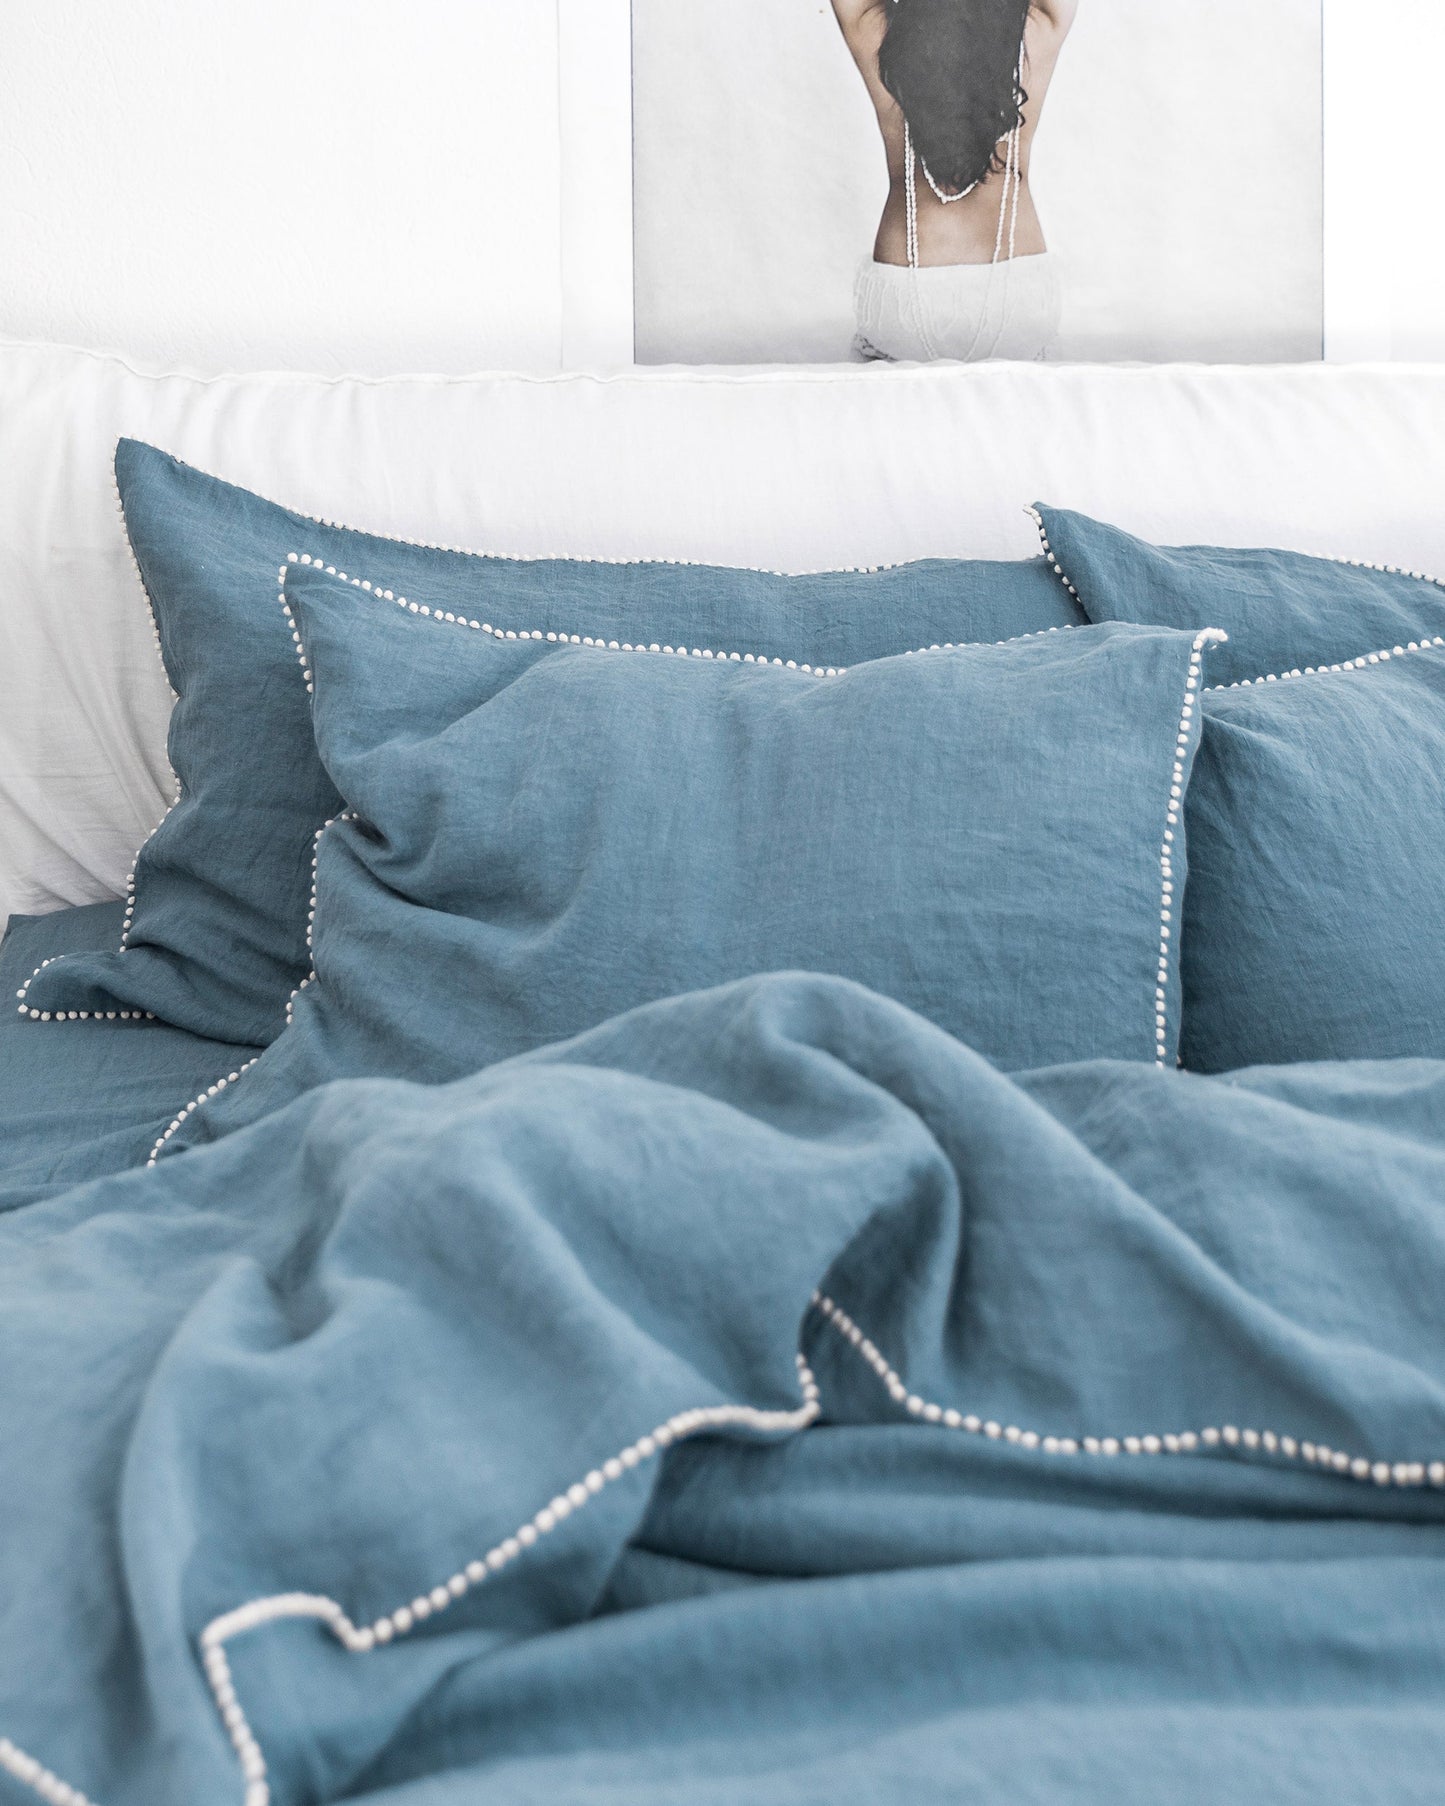 Pom pom trim linen pillowcase in Gray blue - MagicLinen